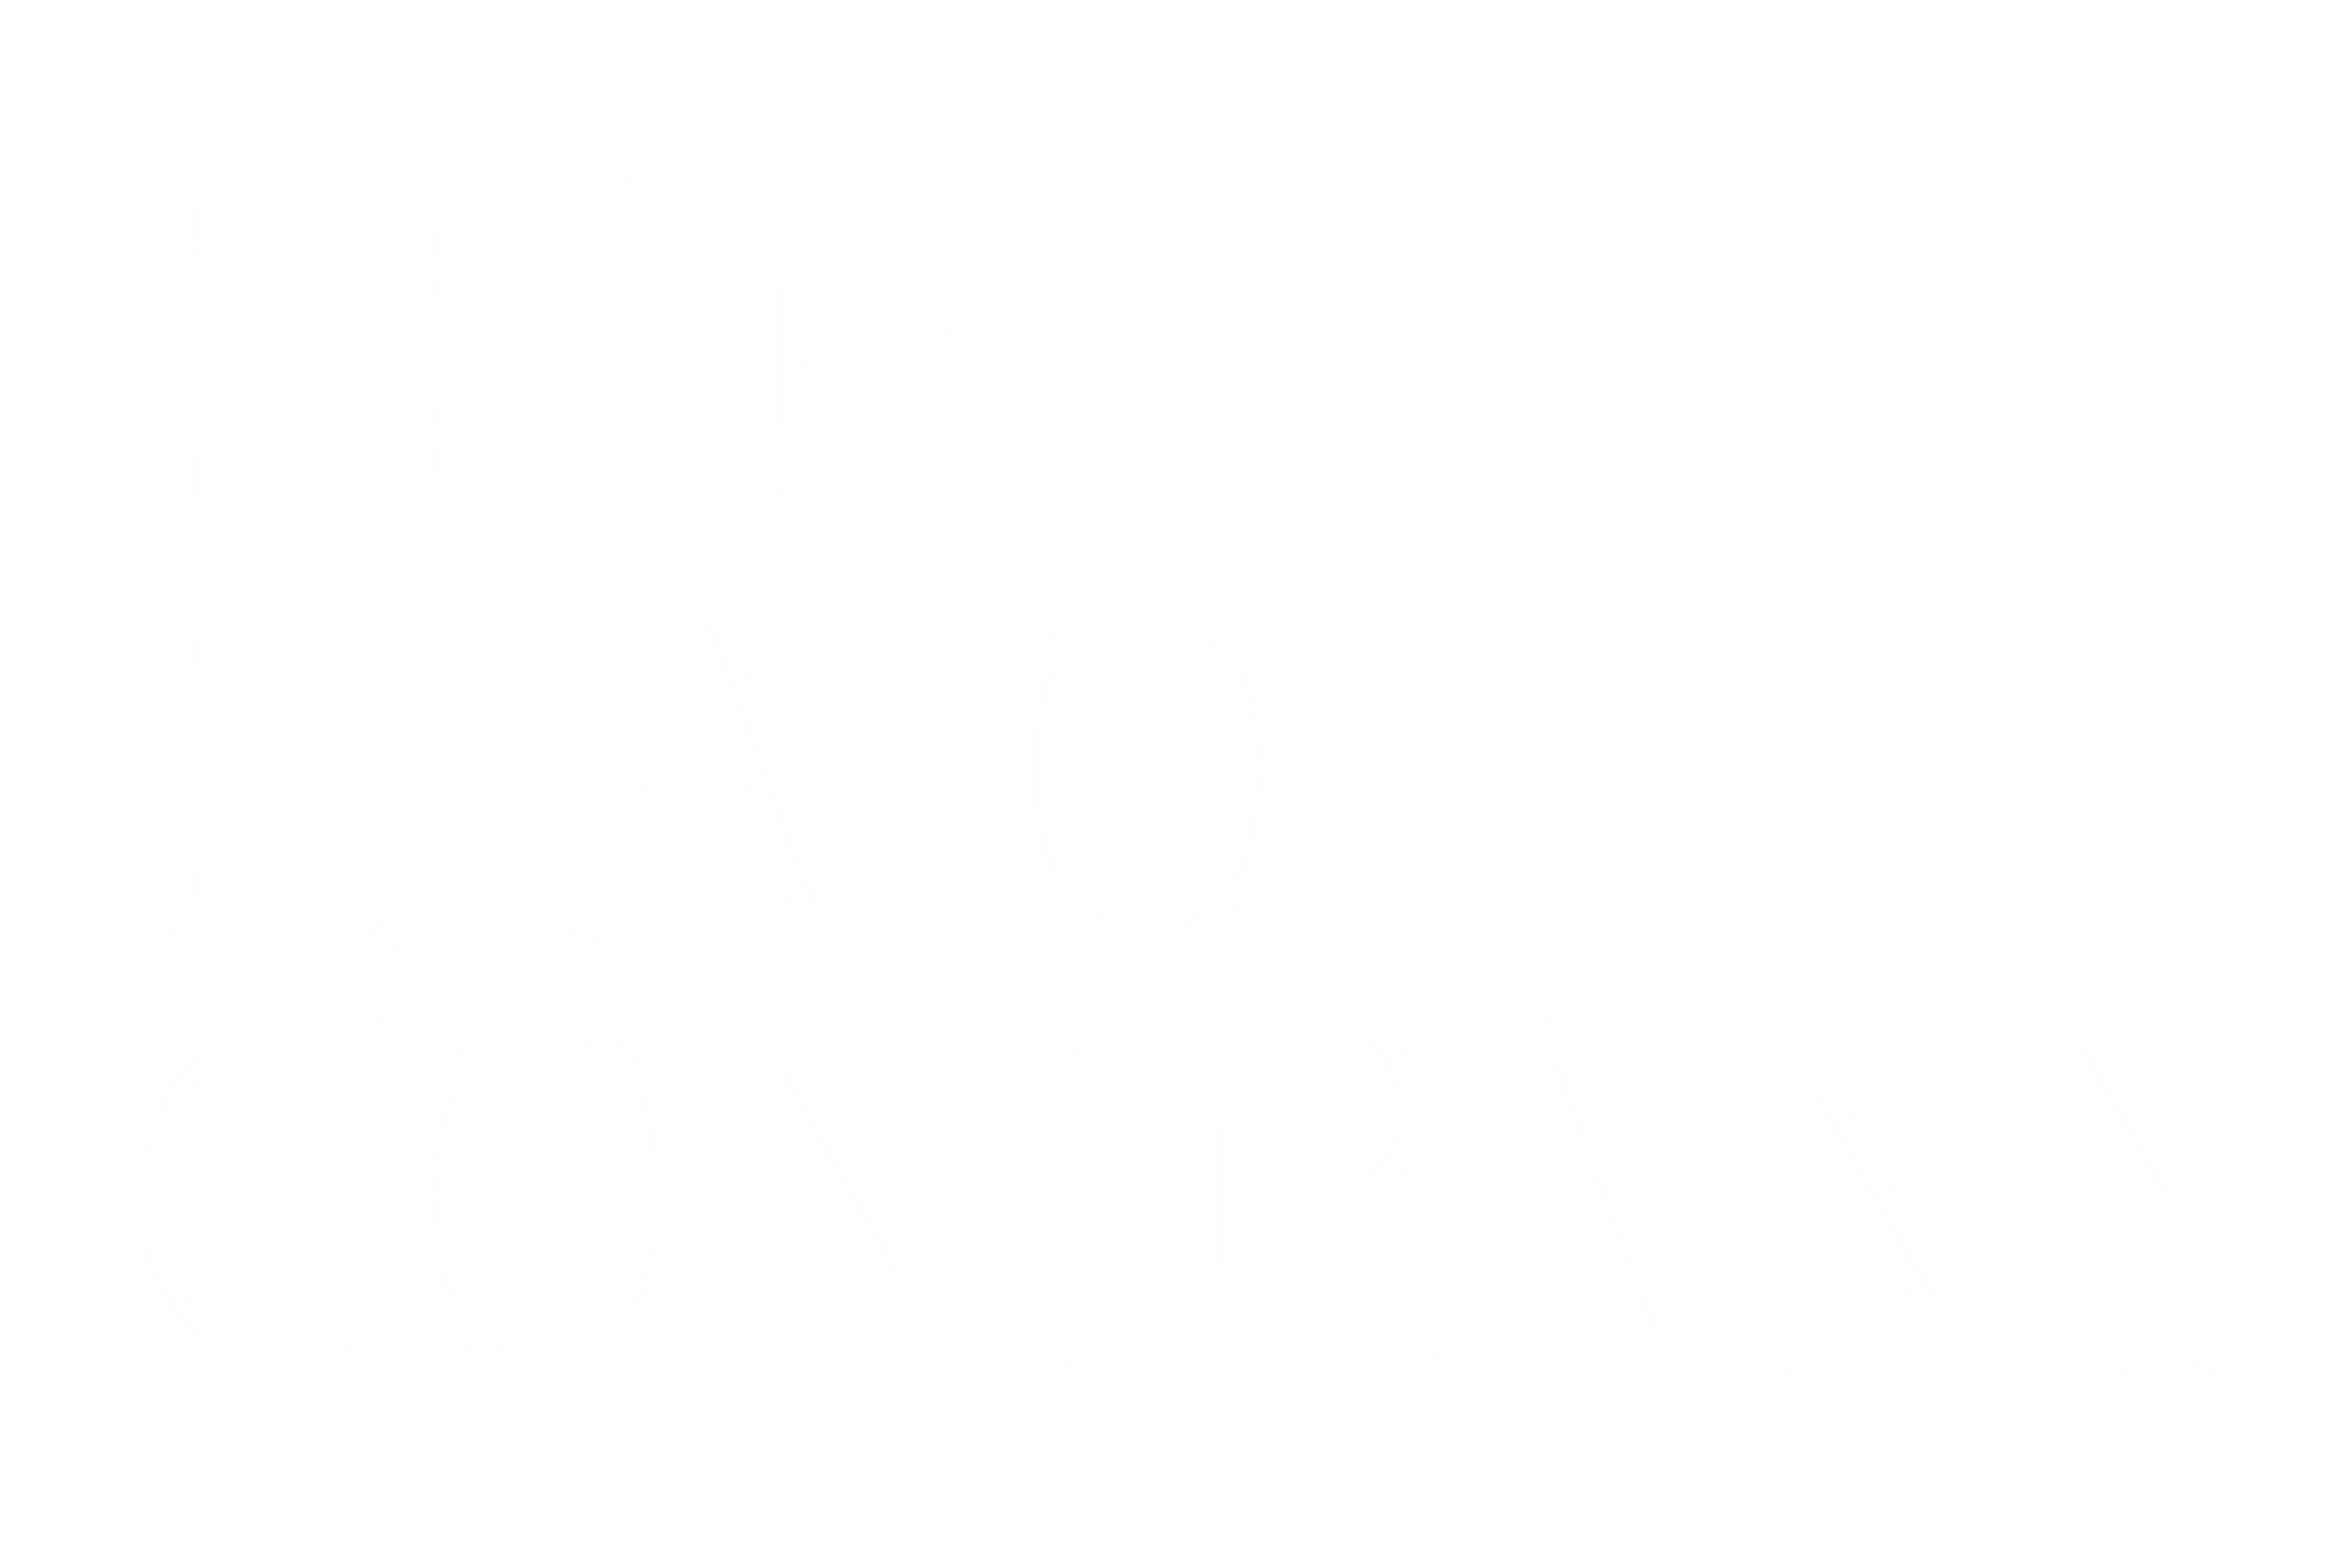 The L.A.O Company